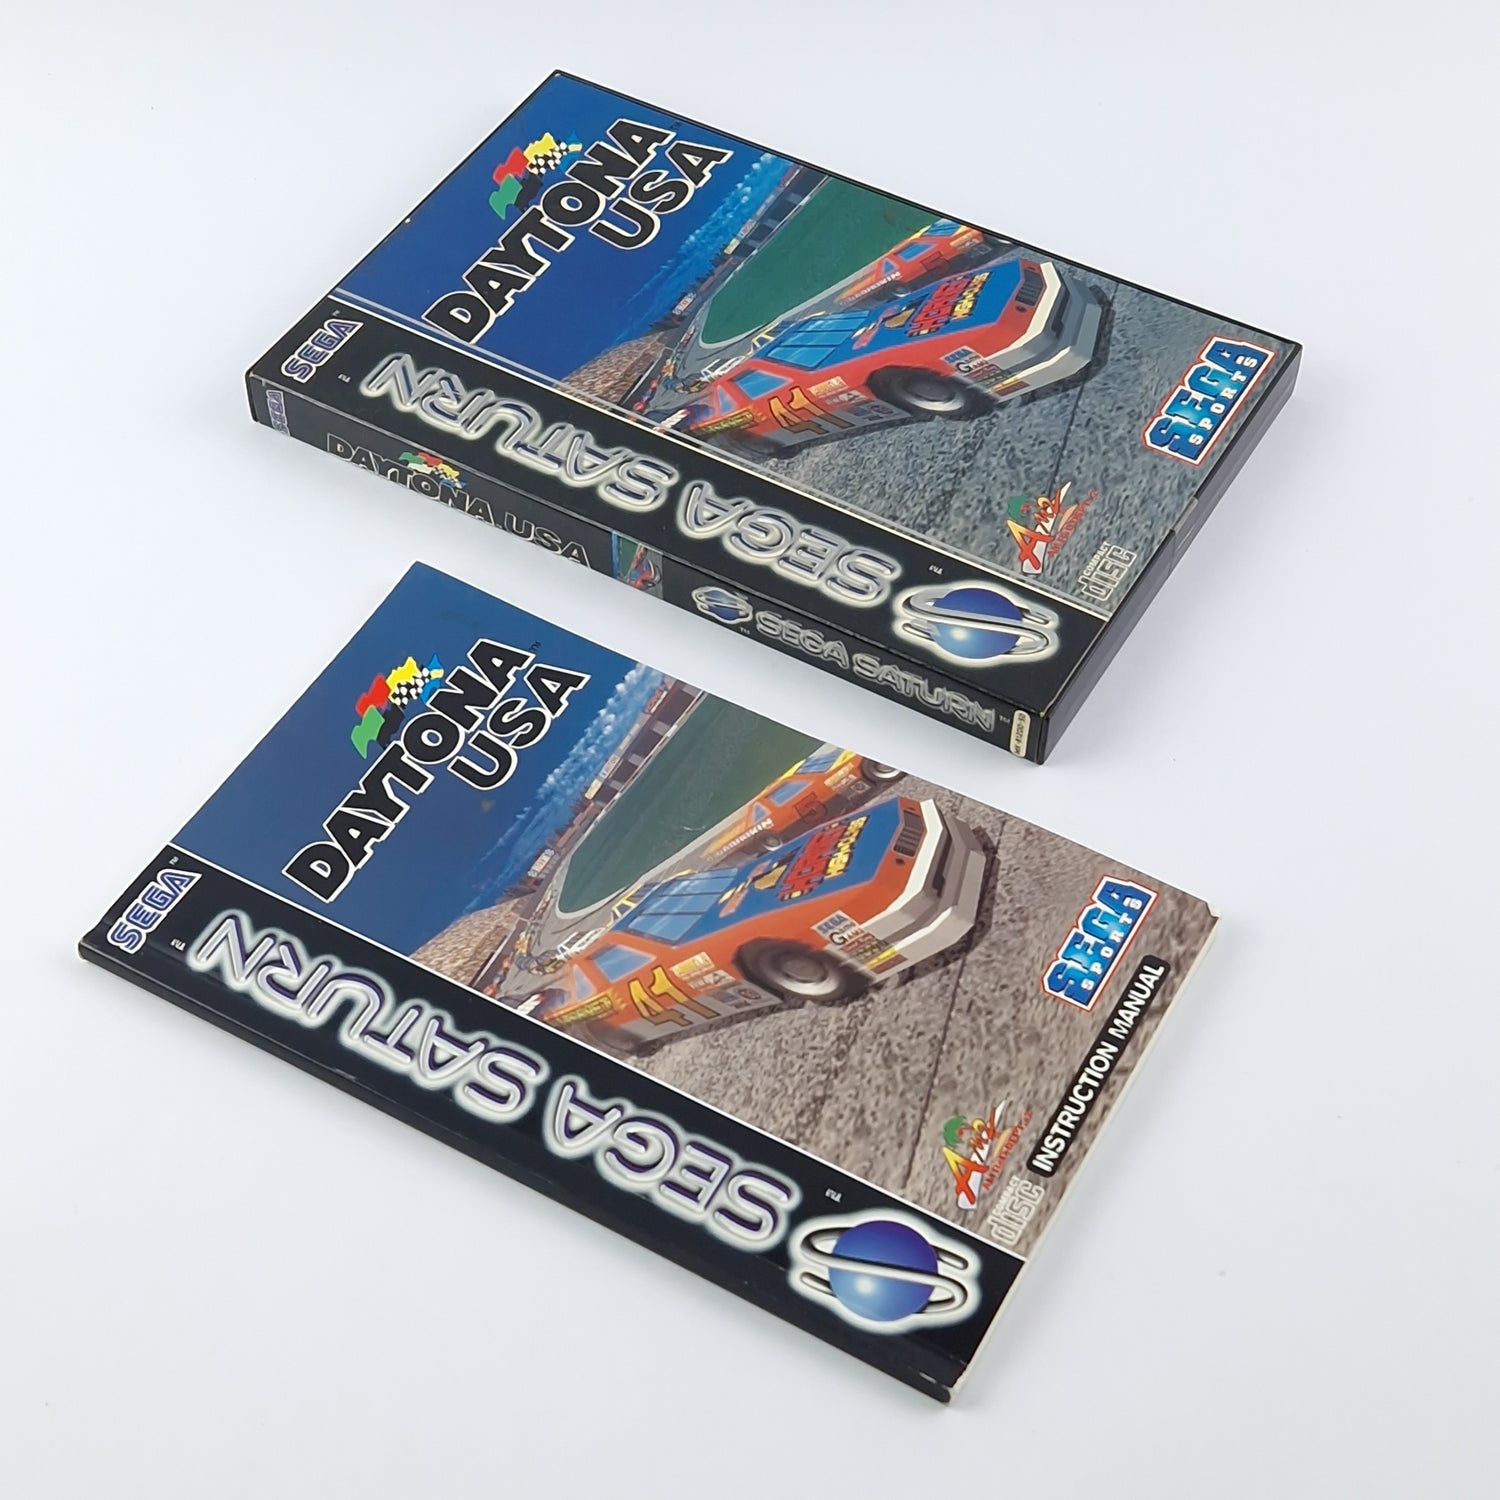 Sega Saturn Spiel : Daytona USA - OVP Anleitung CD PAL Disc Game SEGA Sports